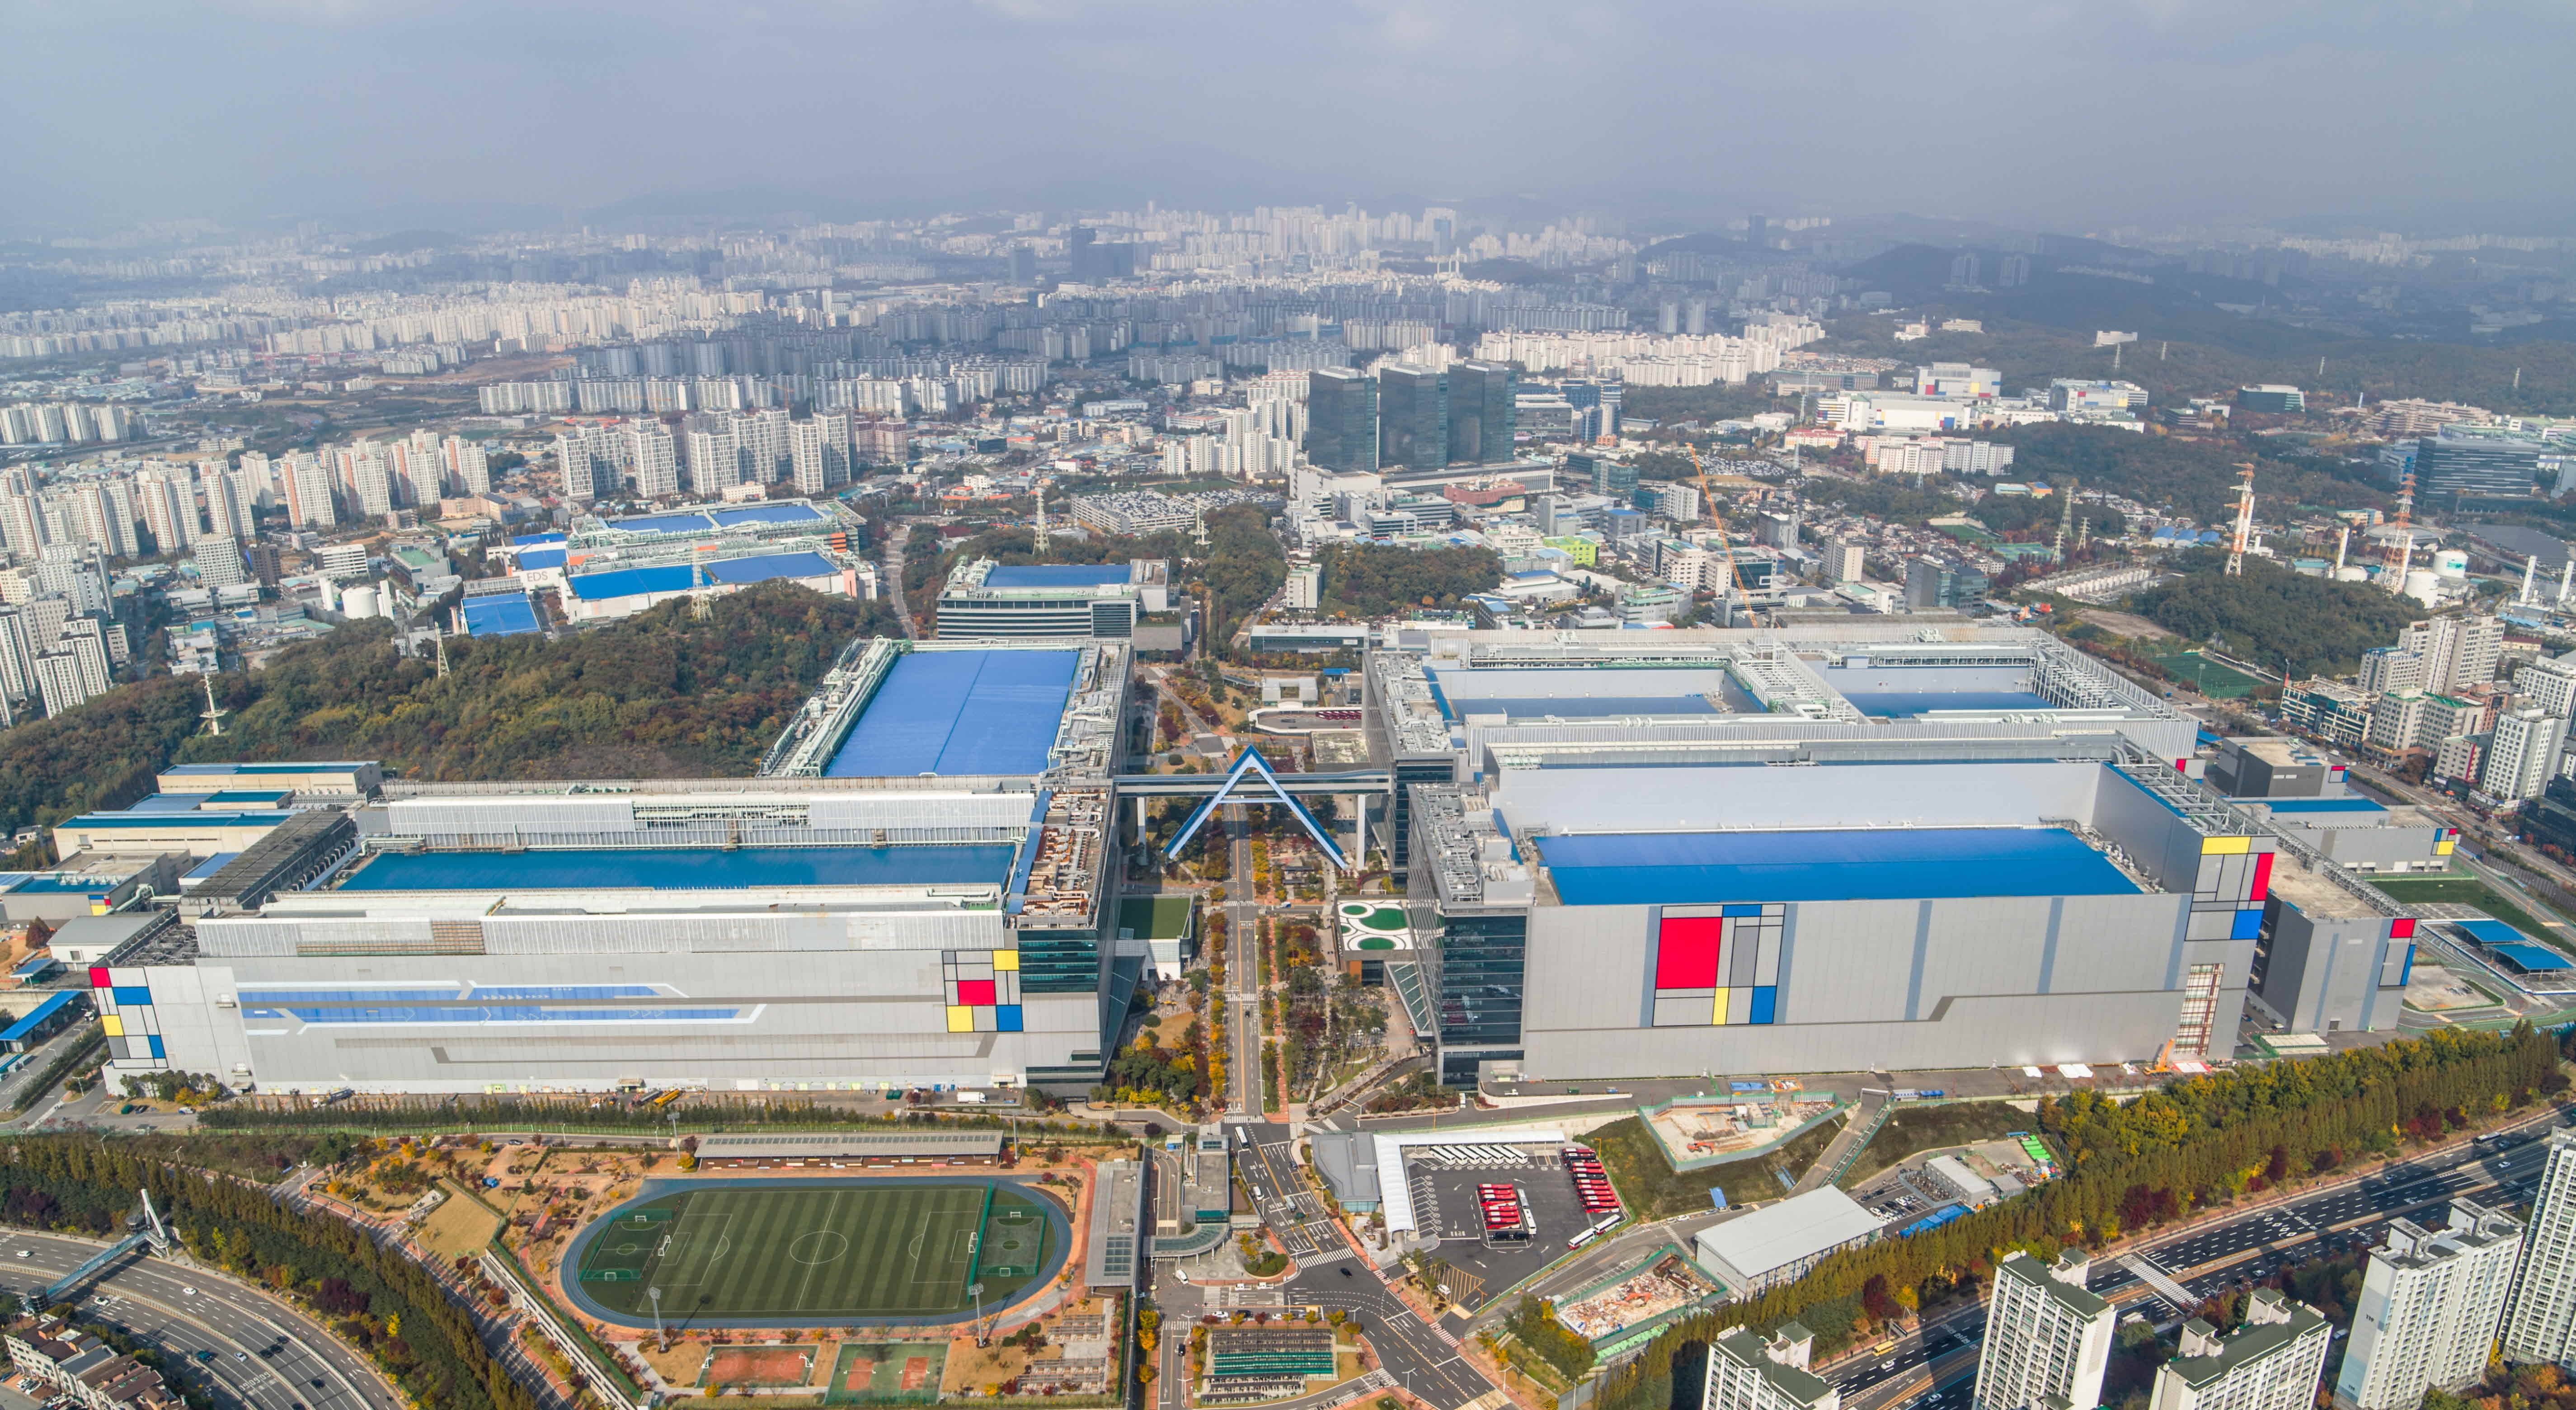 Samsung manufacturing facility